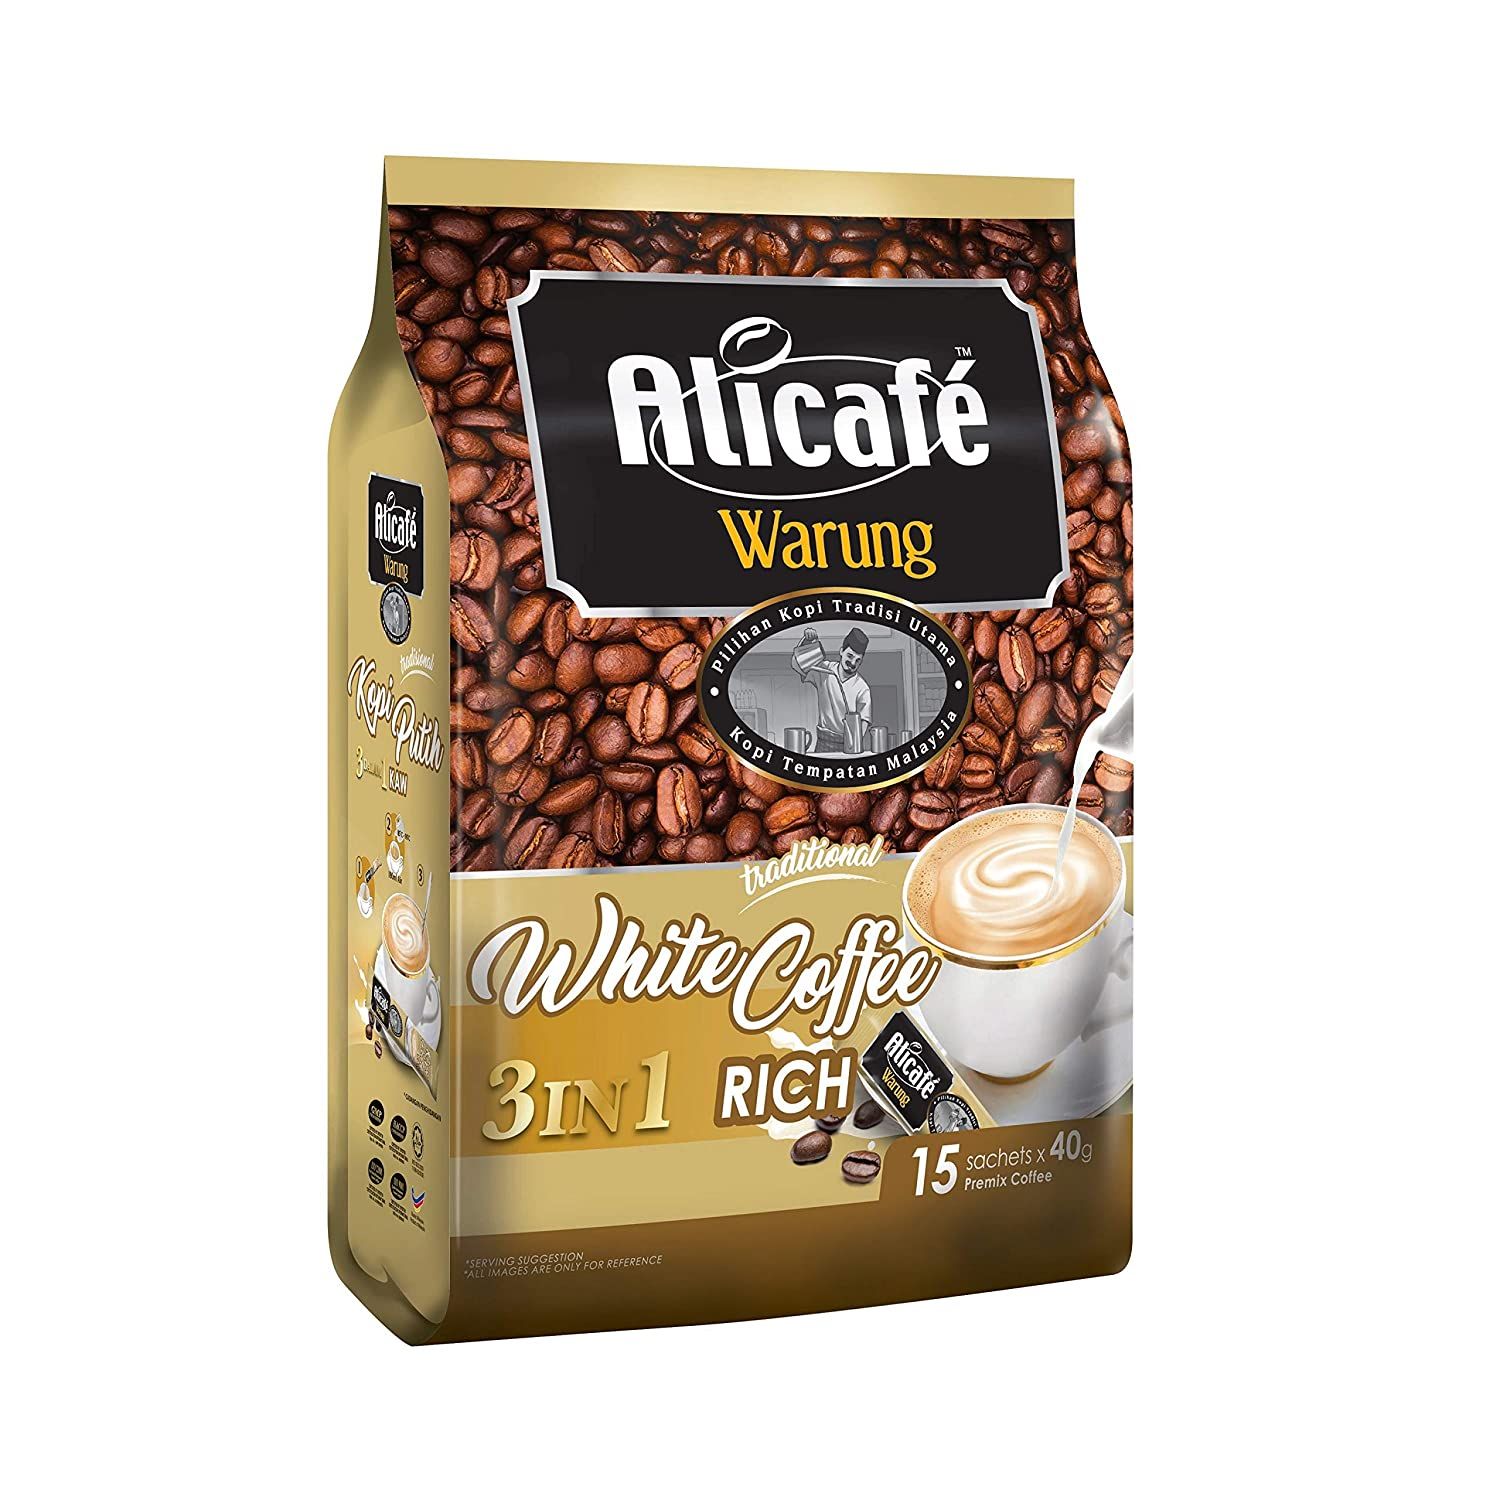 Alicafe White Coffee Image